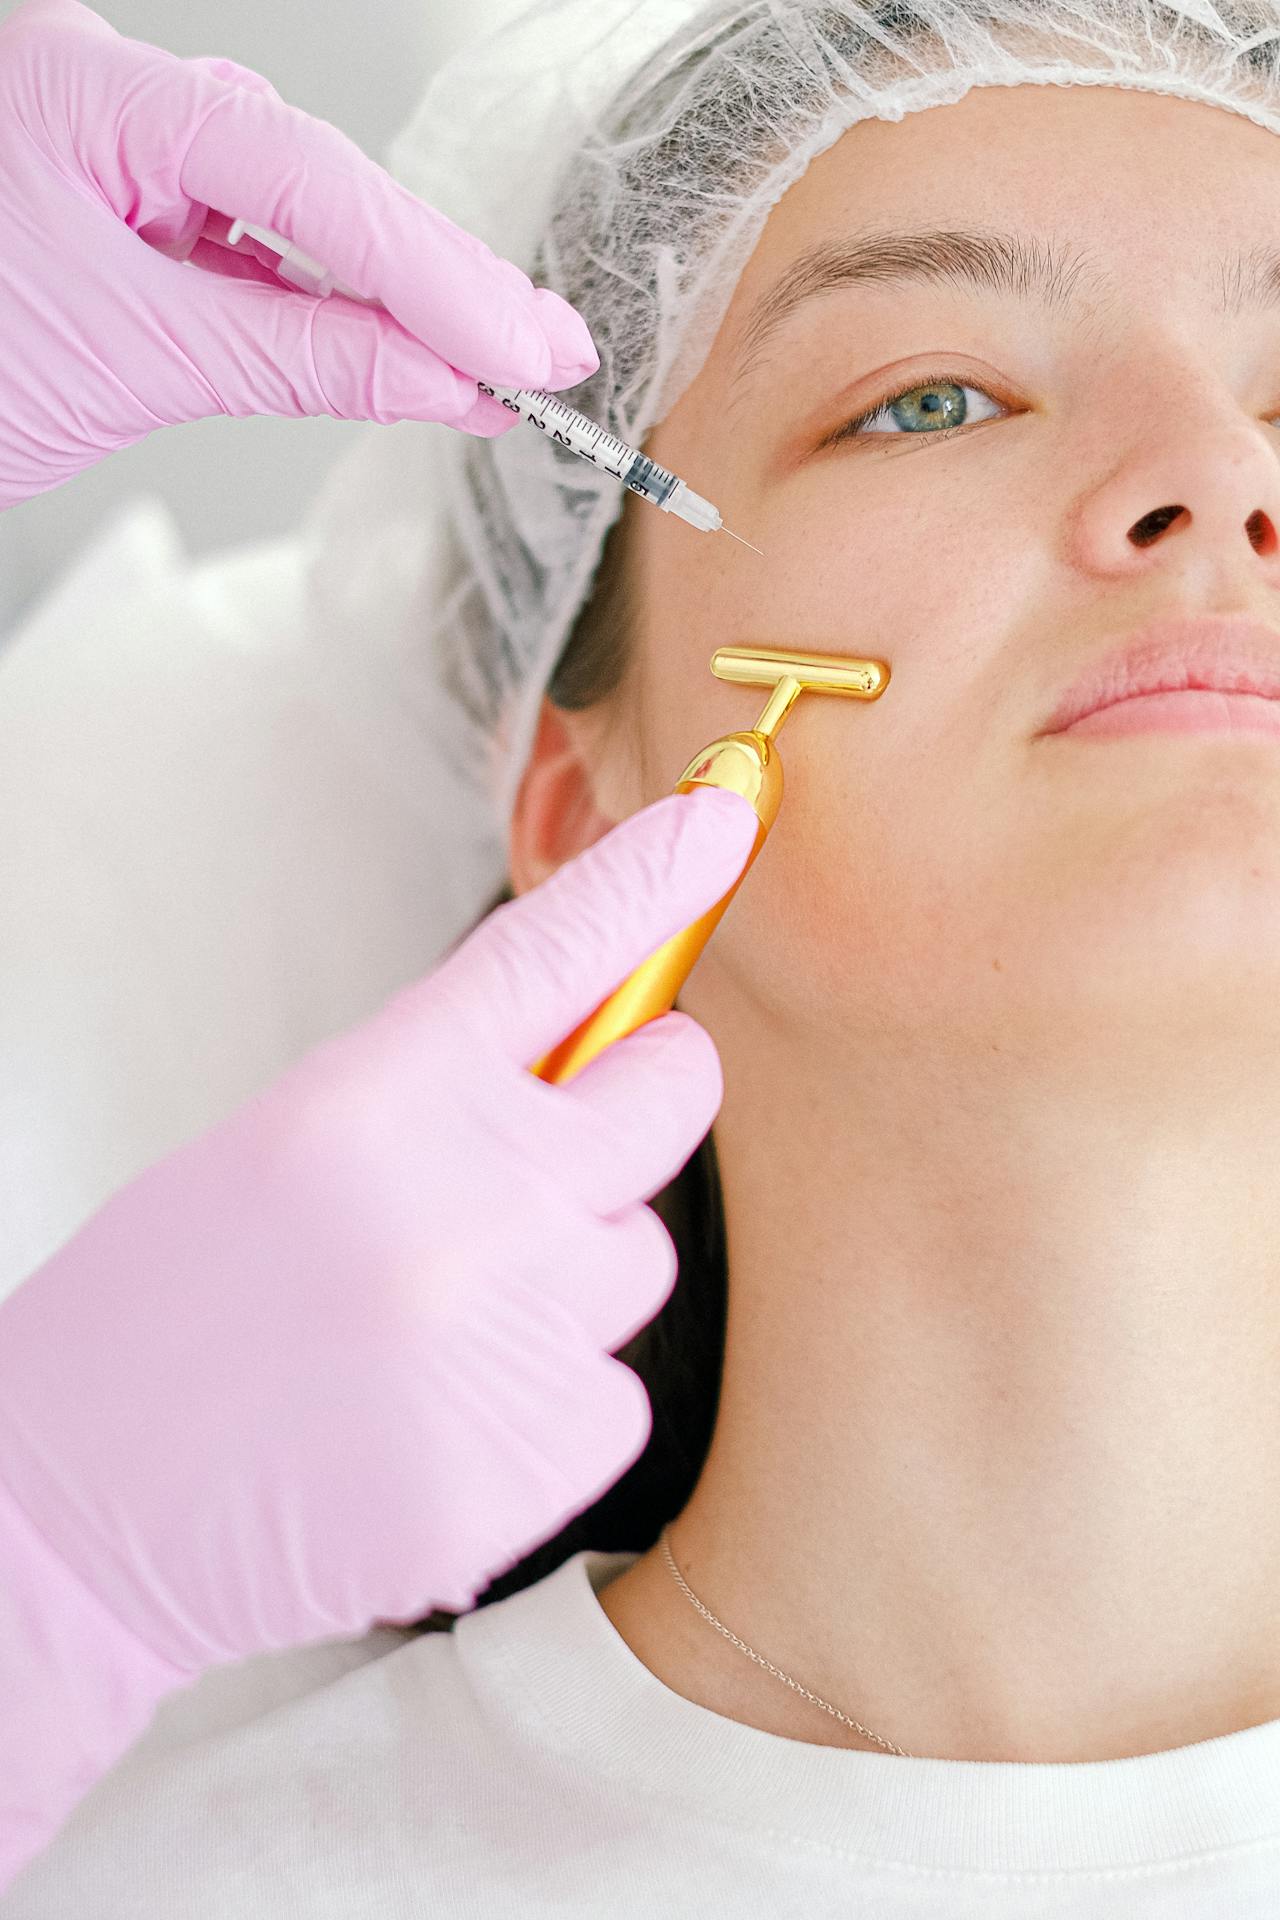 Woman receiving neurotoxin treatment for upper face